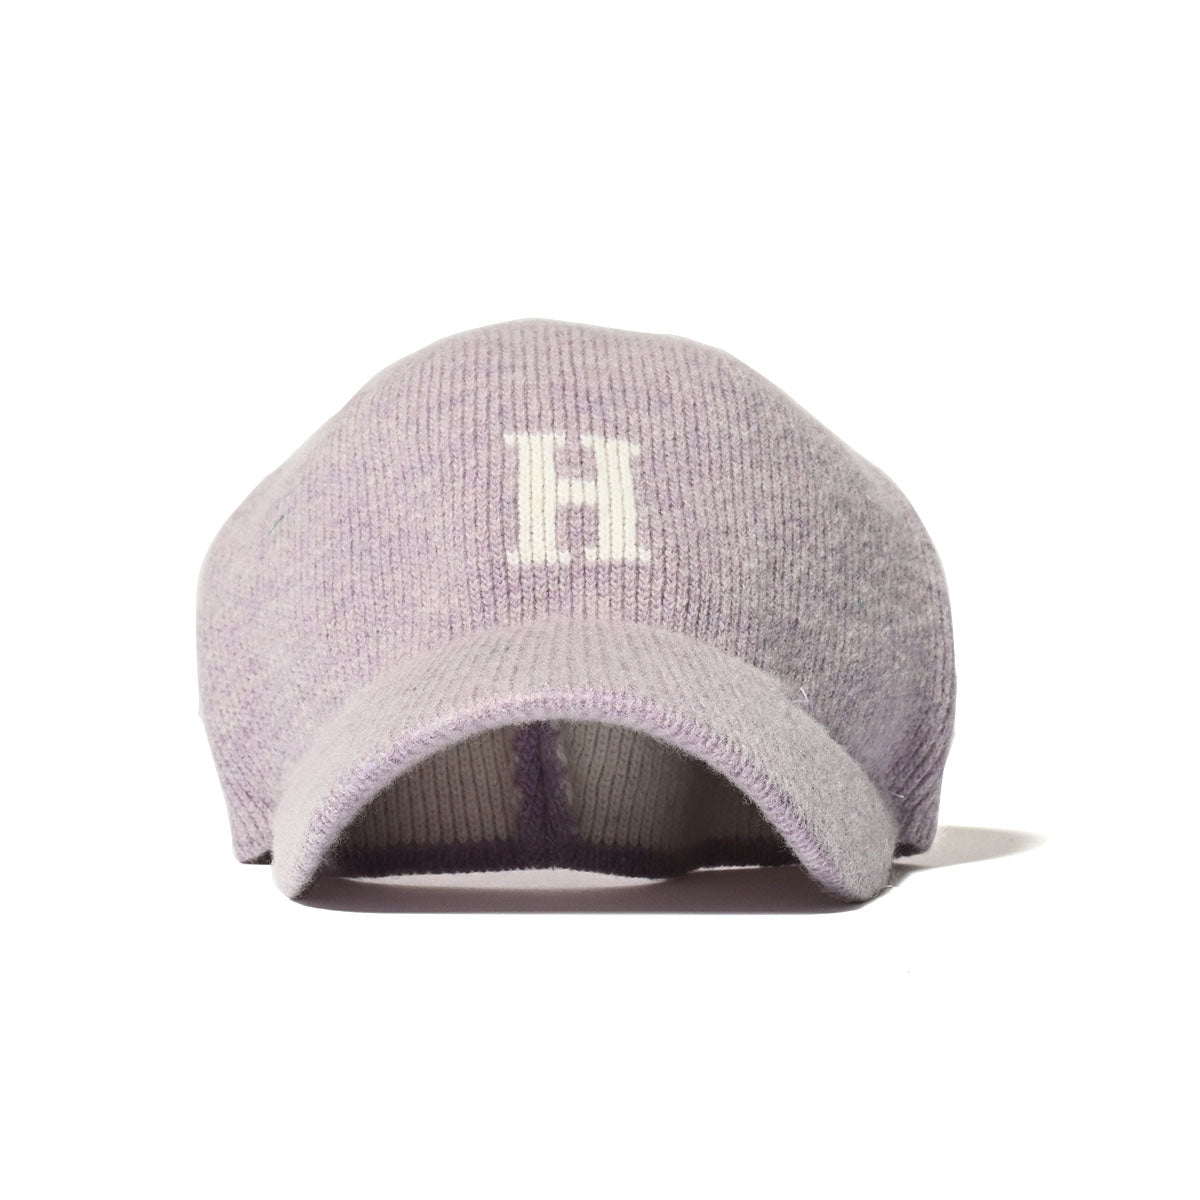 HOMEGAME - H LOGO 針織棒球帽 紫色